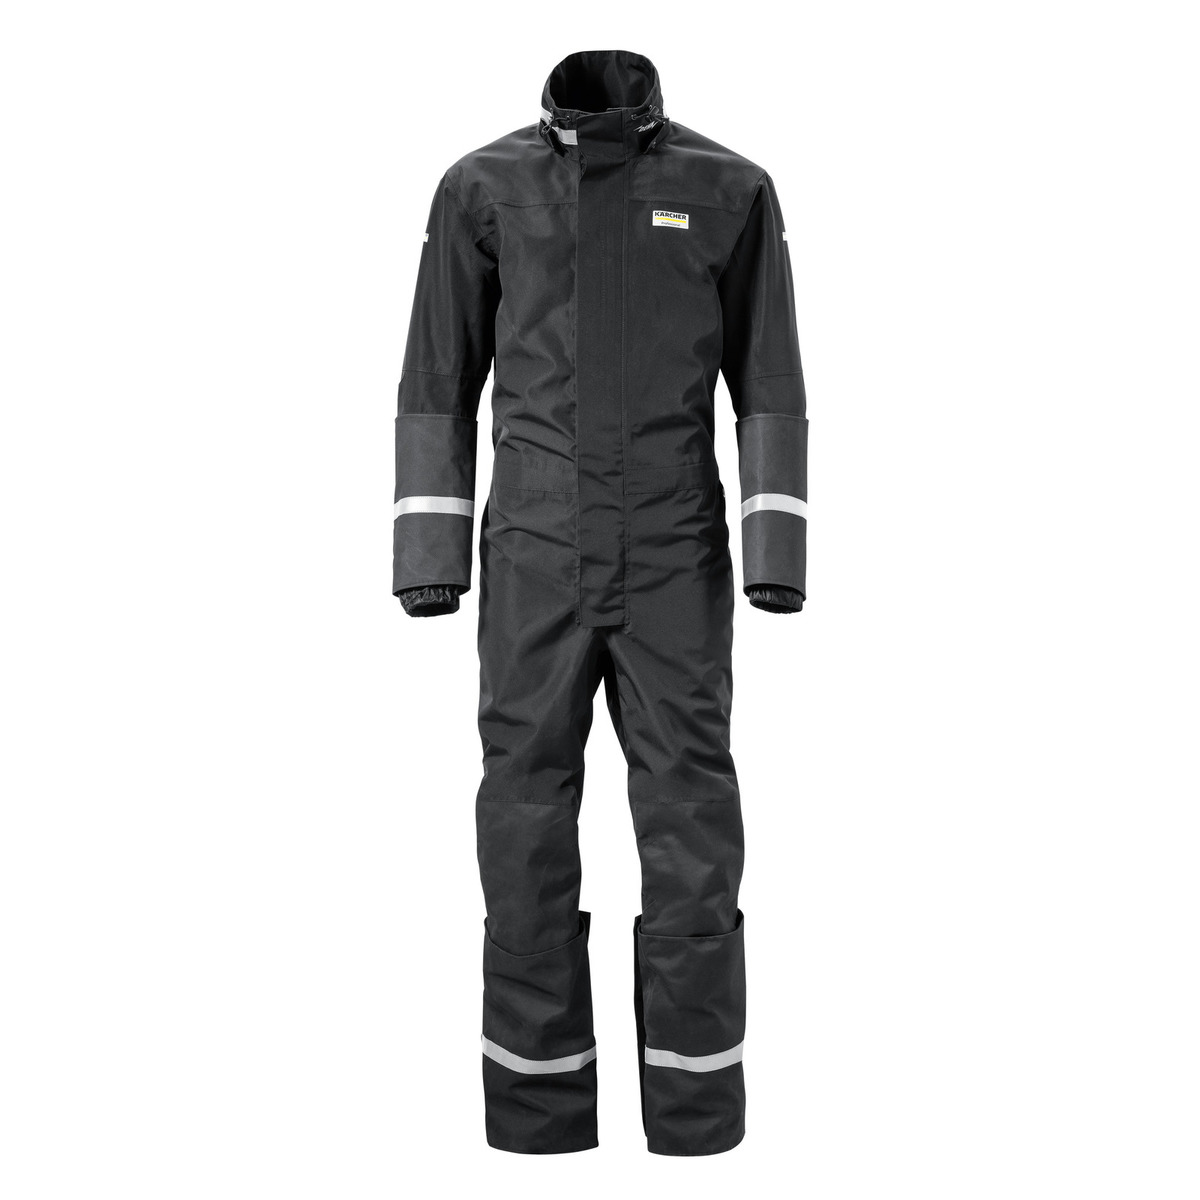 High-pressure protective suit, size L – Өндөр даралтын хамгаалалтын хувцас, L размер